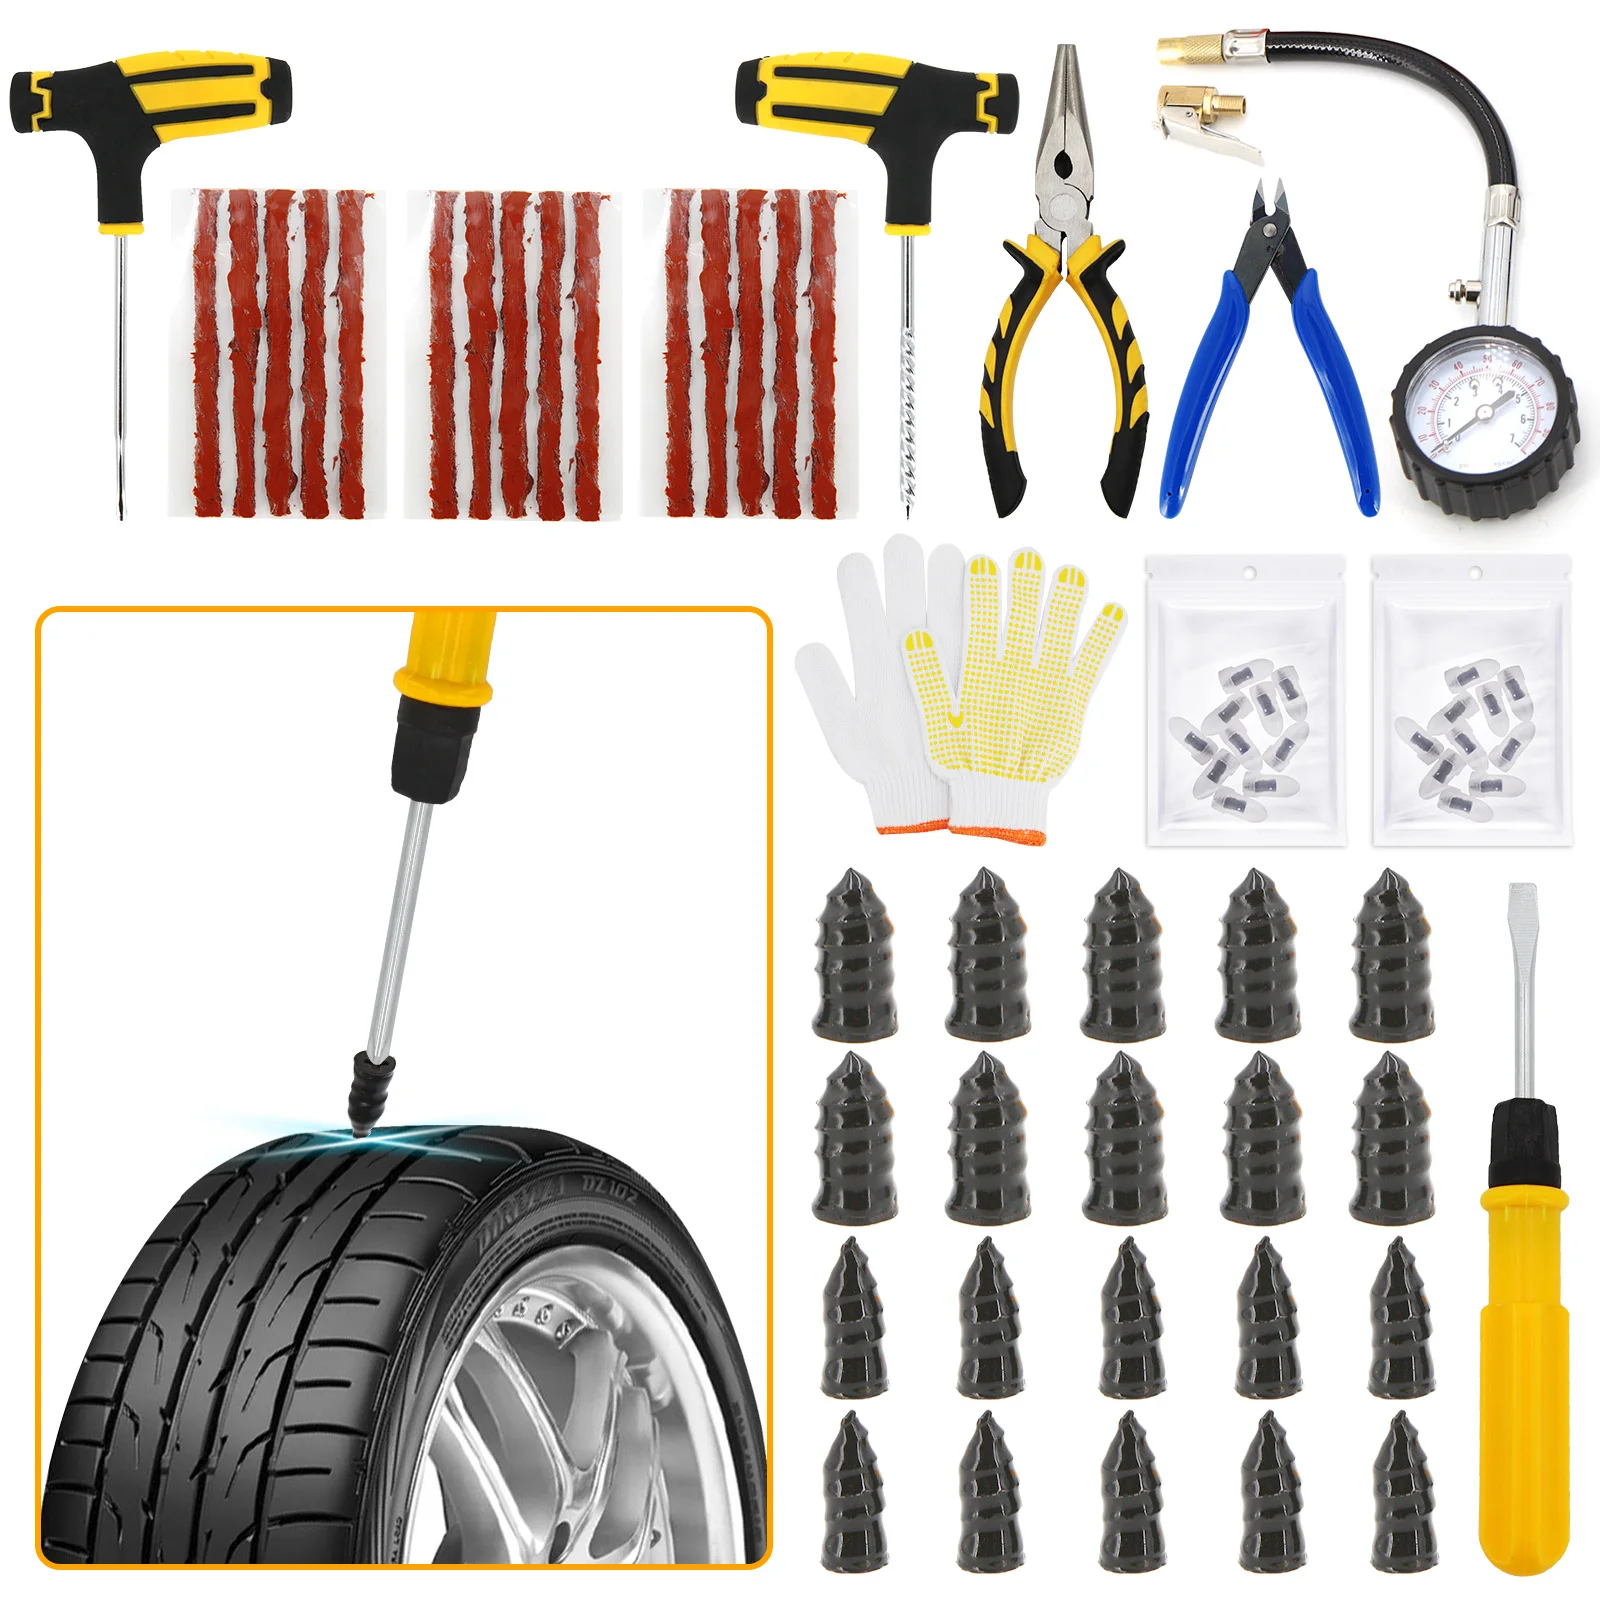 

Car Tire Repair Tool Kit Studding Set Auto Bike Puncture Plug Garage Needle Nose Pliers Vacuum Film Nail Screws for Audi Bwm